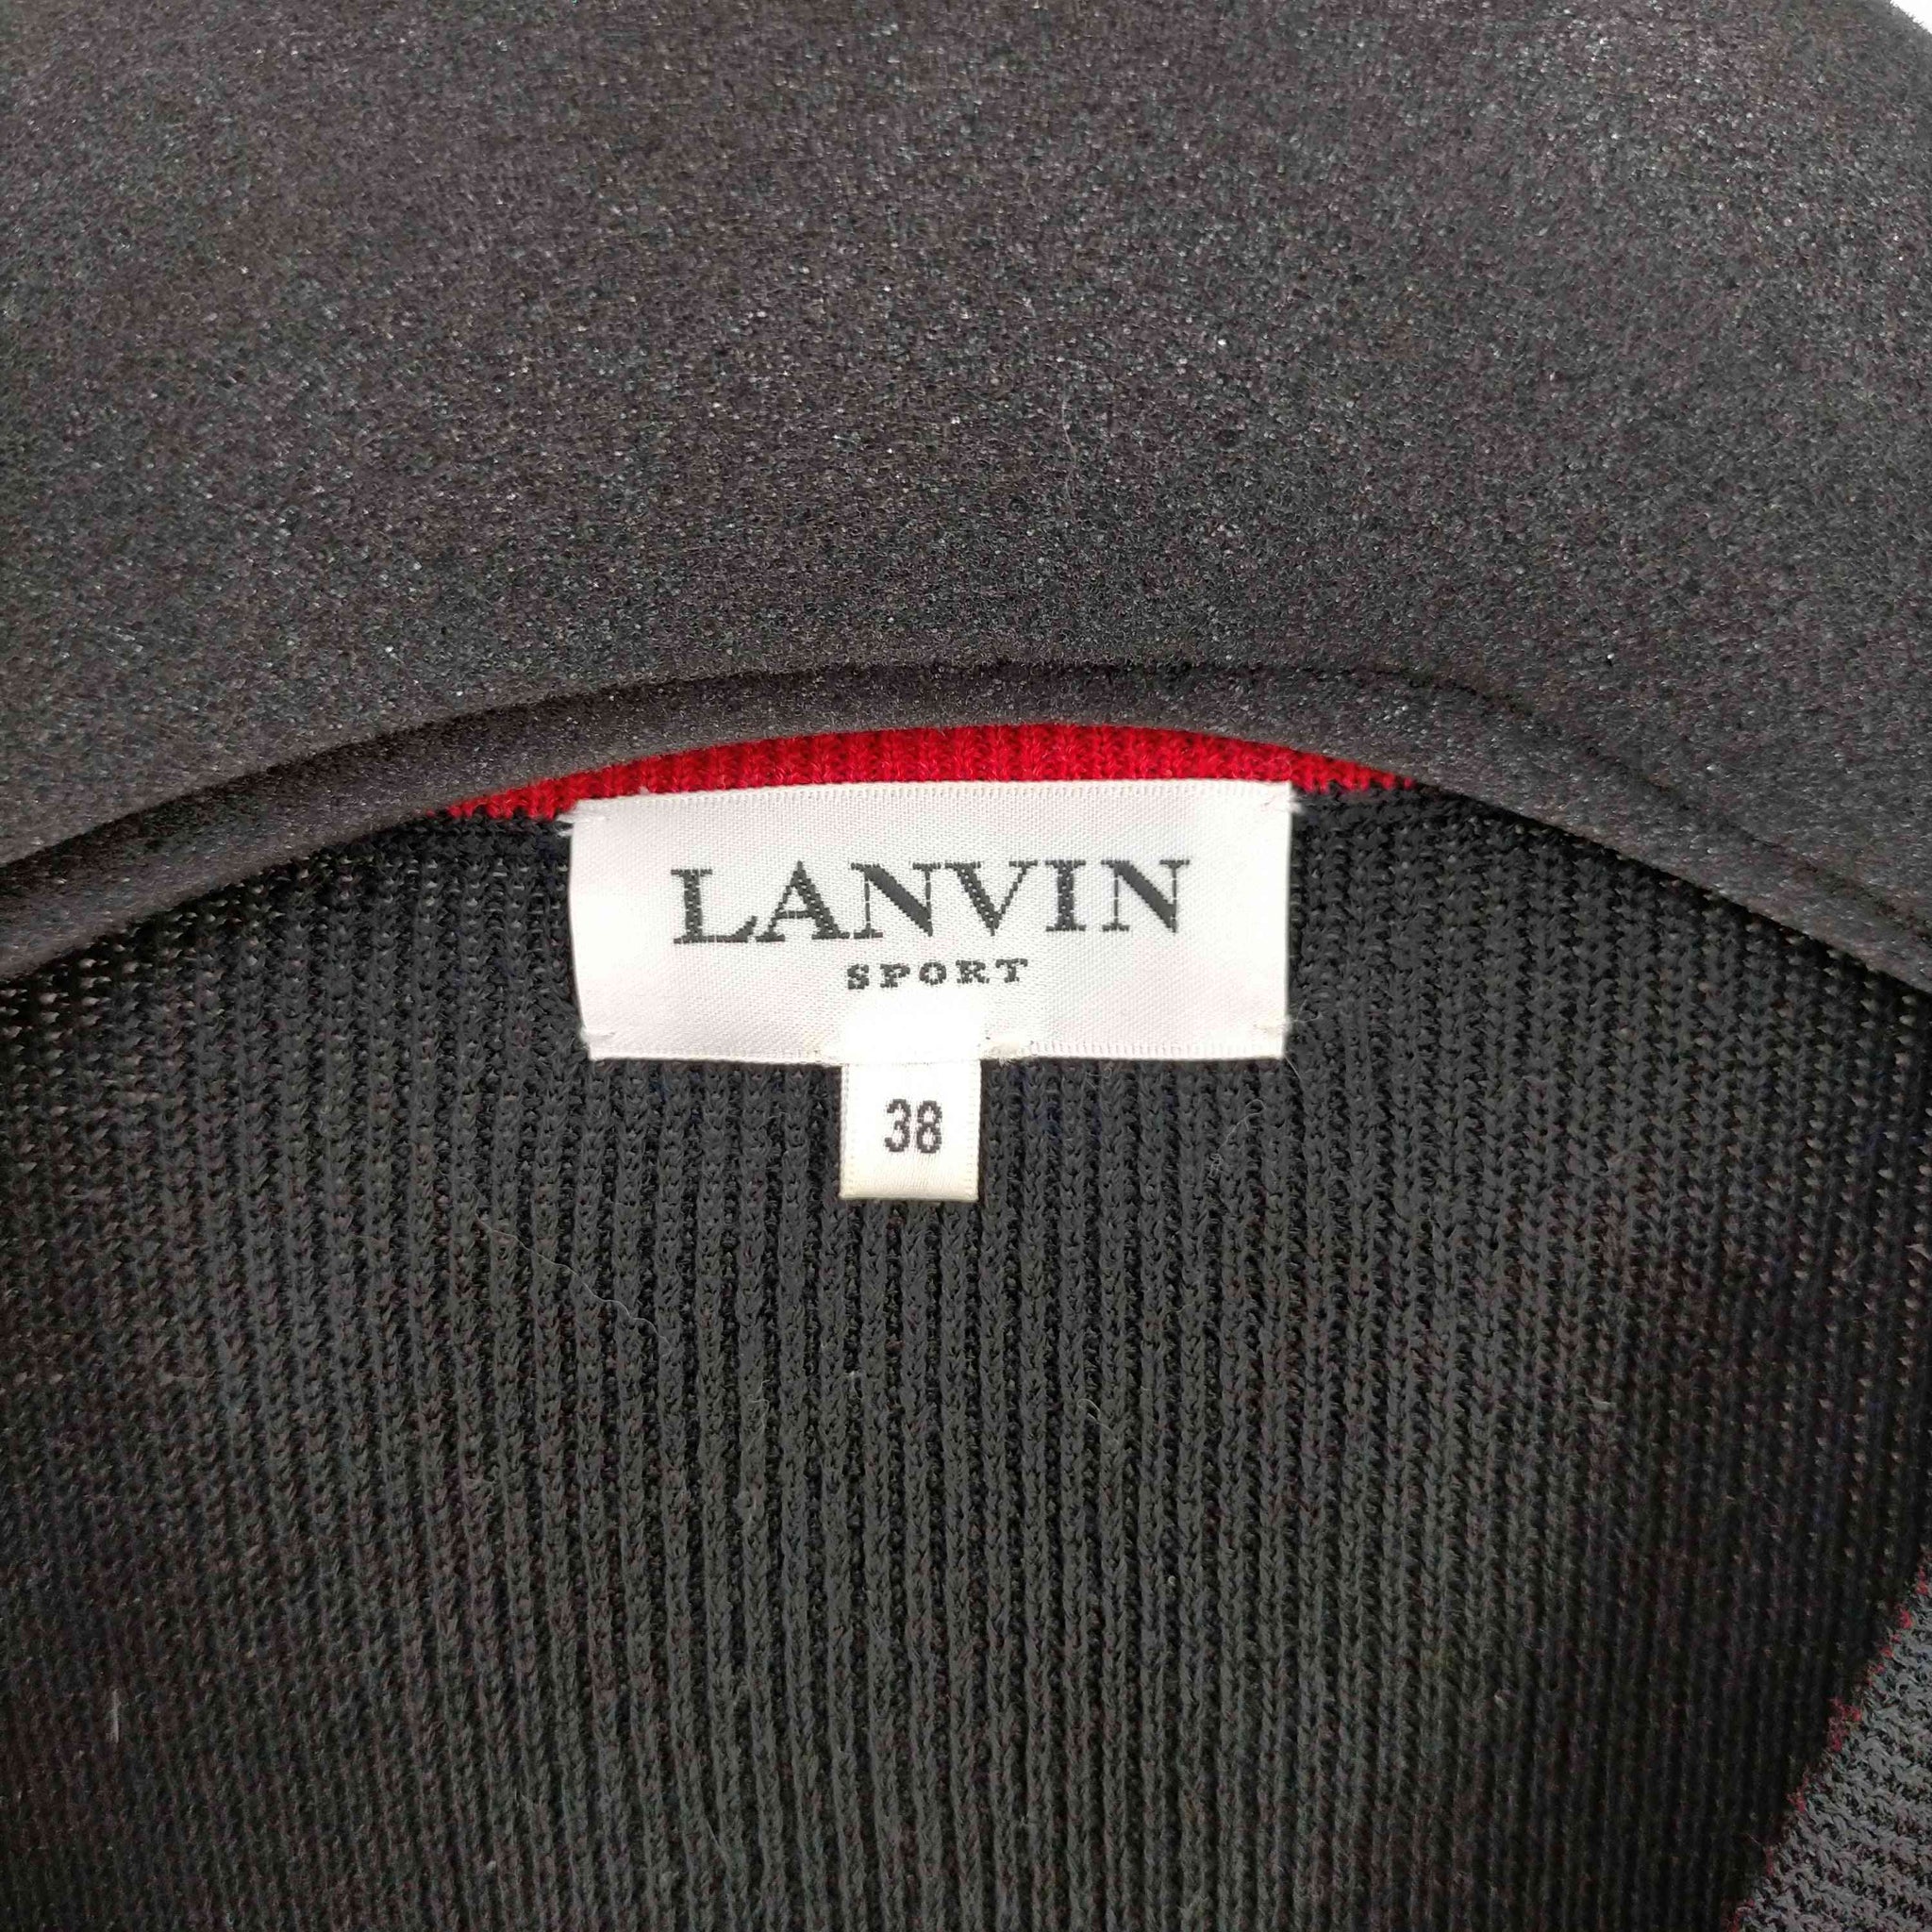 LANVIN(ランバン)SPORT ロゴ刺繍 デザインニットベスト